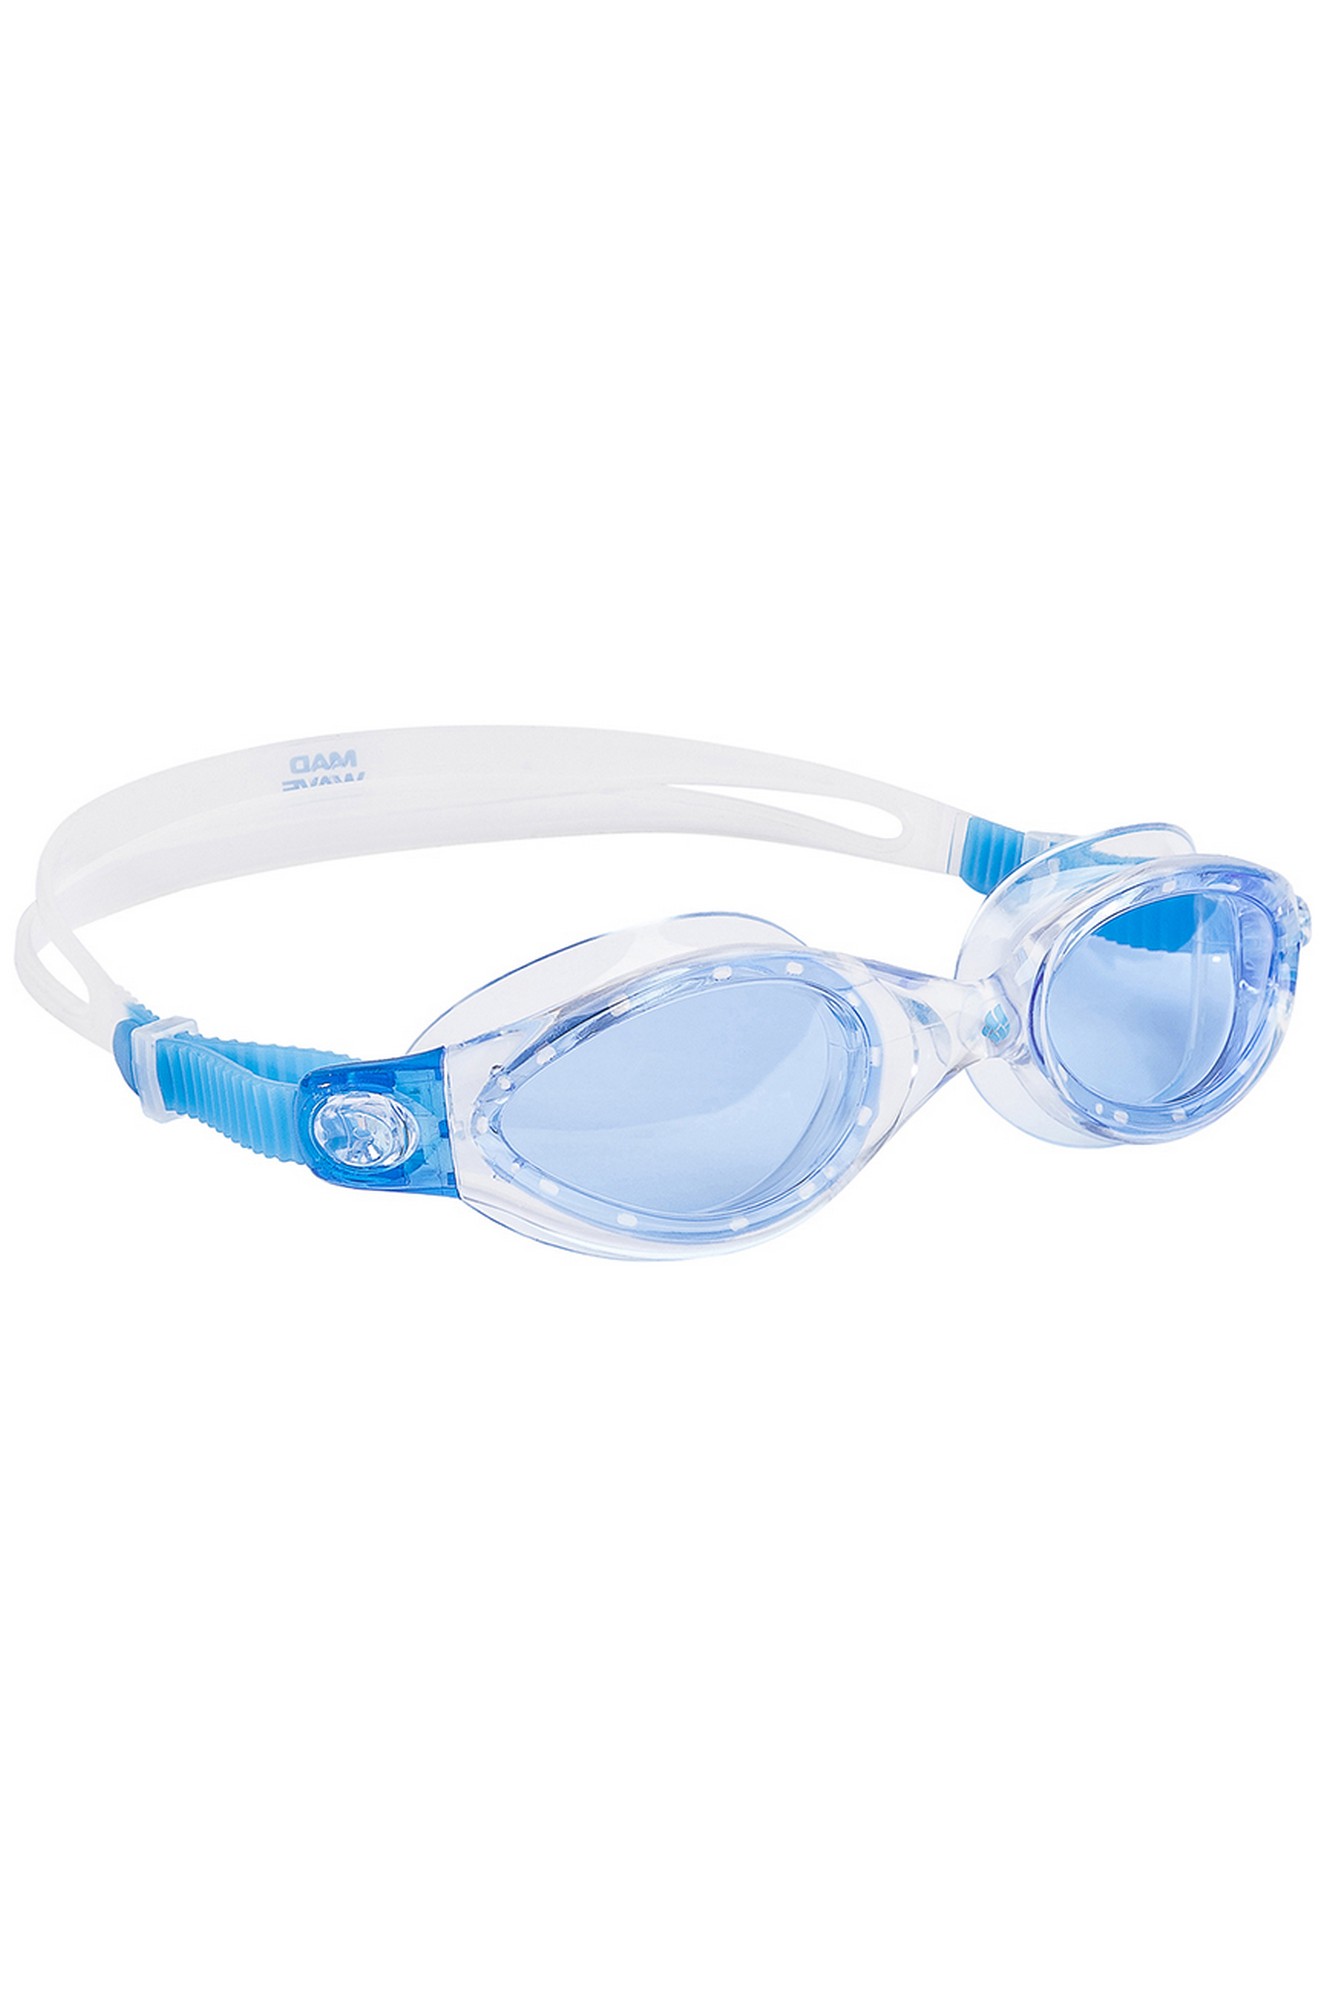 Очки для плавания Mad Wave Clear Vision CP Lens M0431 06 0 16W синий,  - купить со скидкой